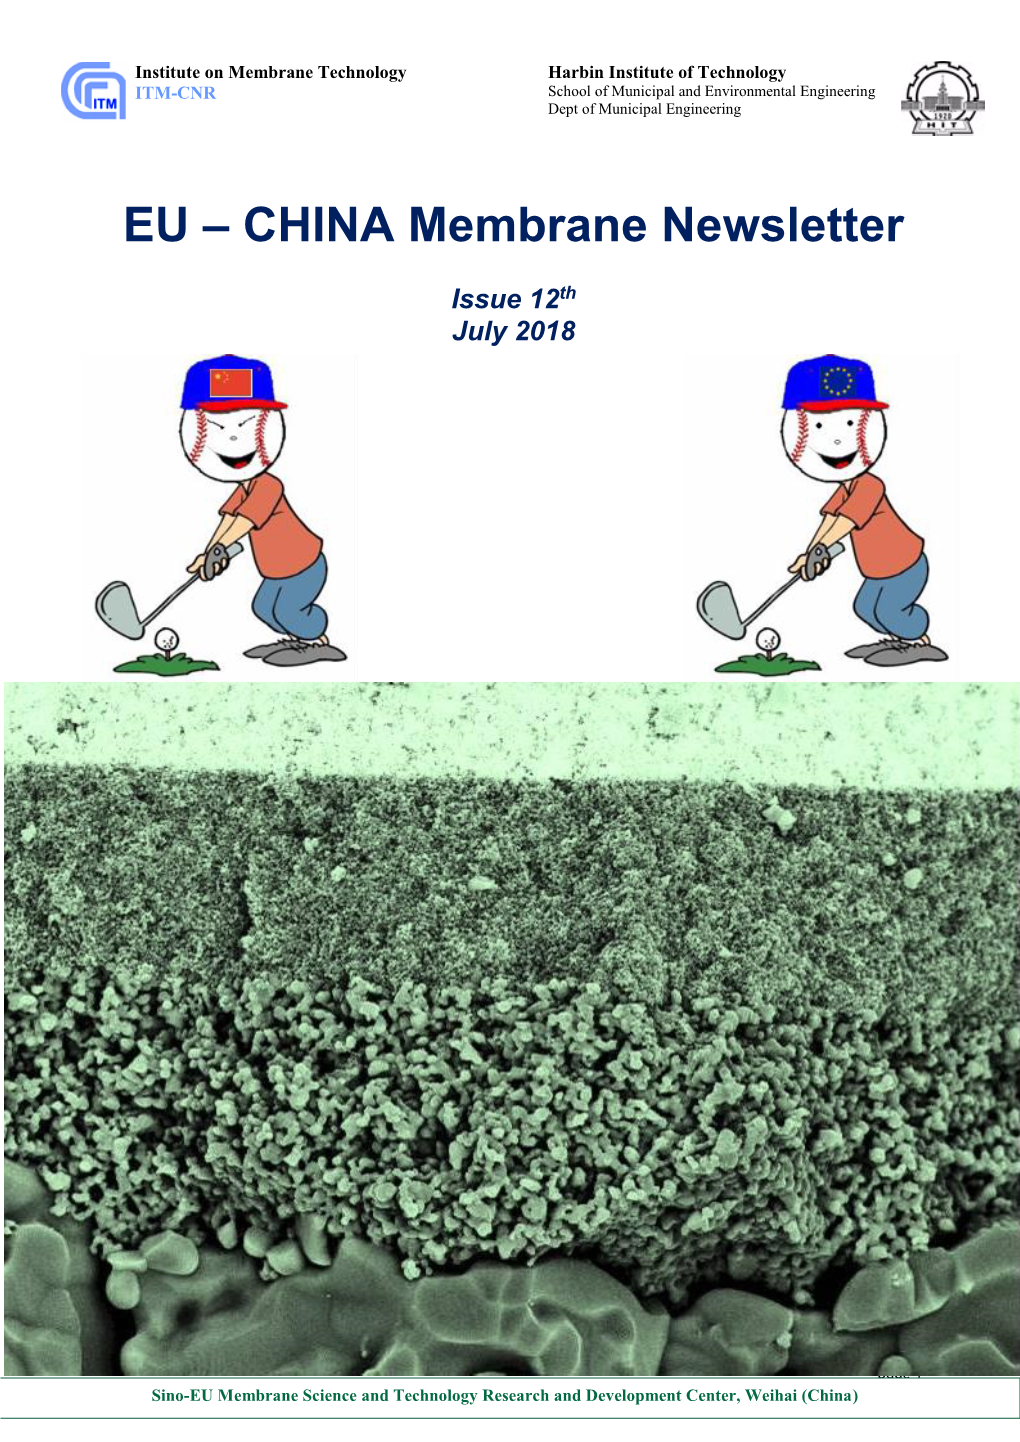 EU – CHINA Membrane Newsletter